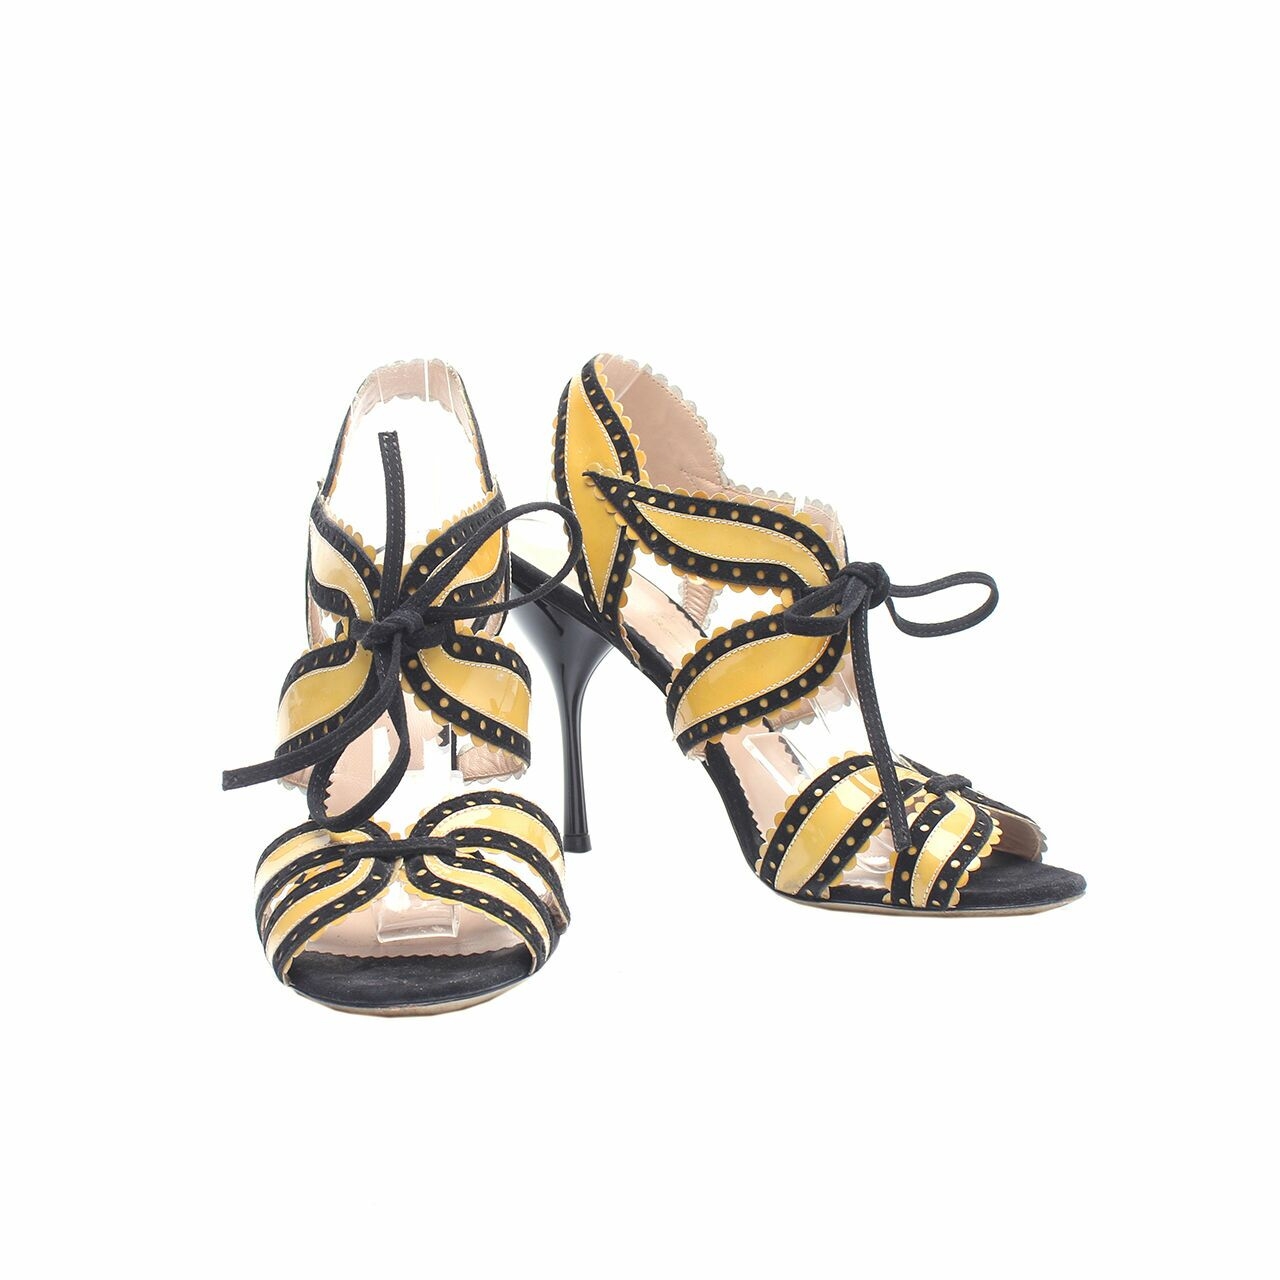 Emporio Armani Black & Yellow Heels